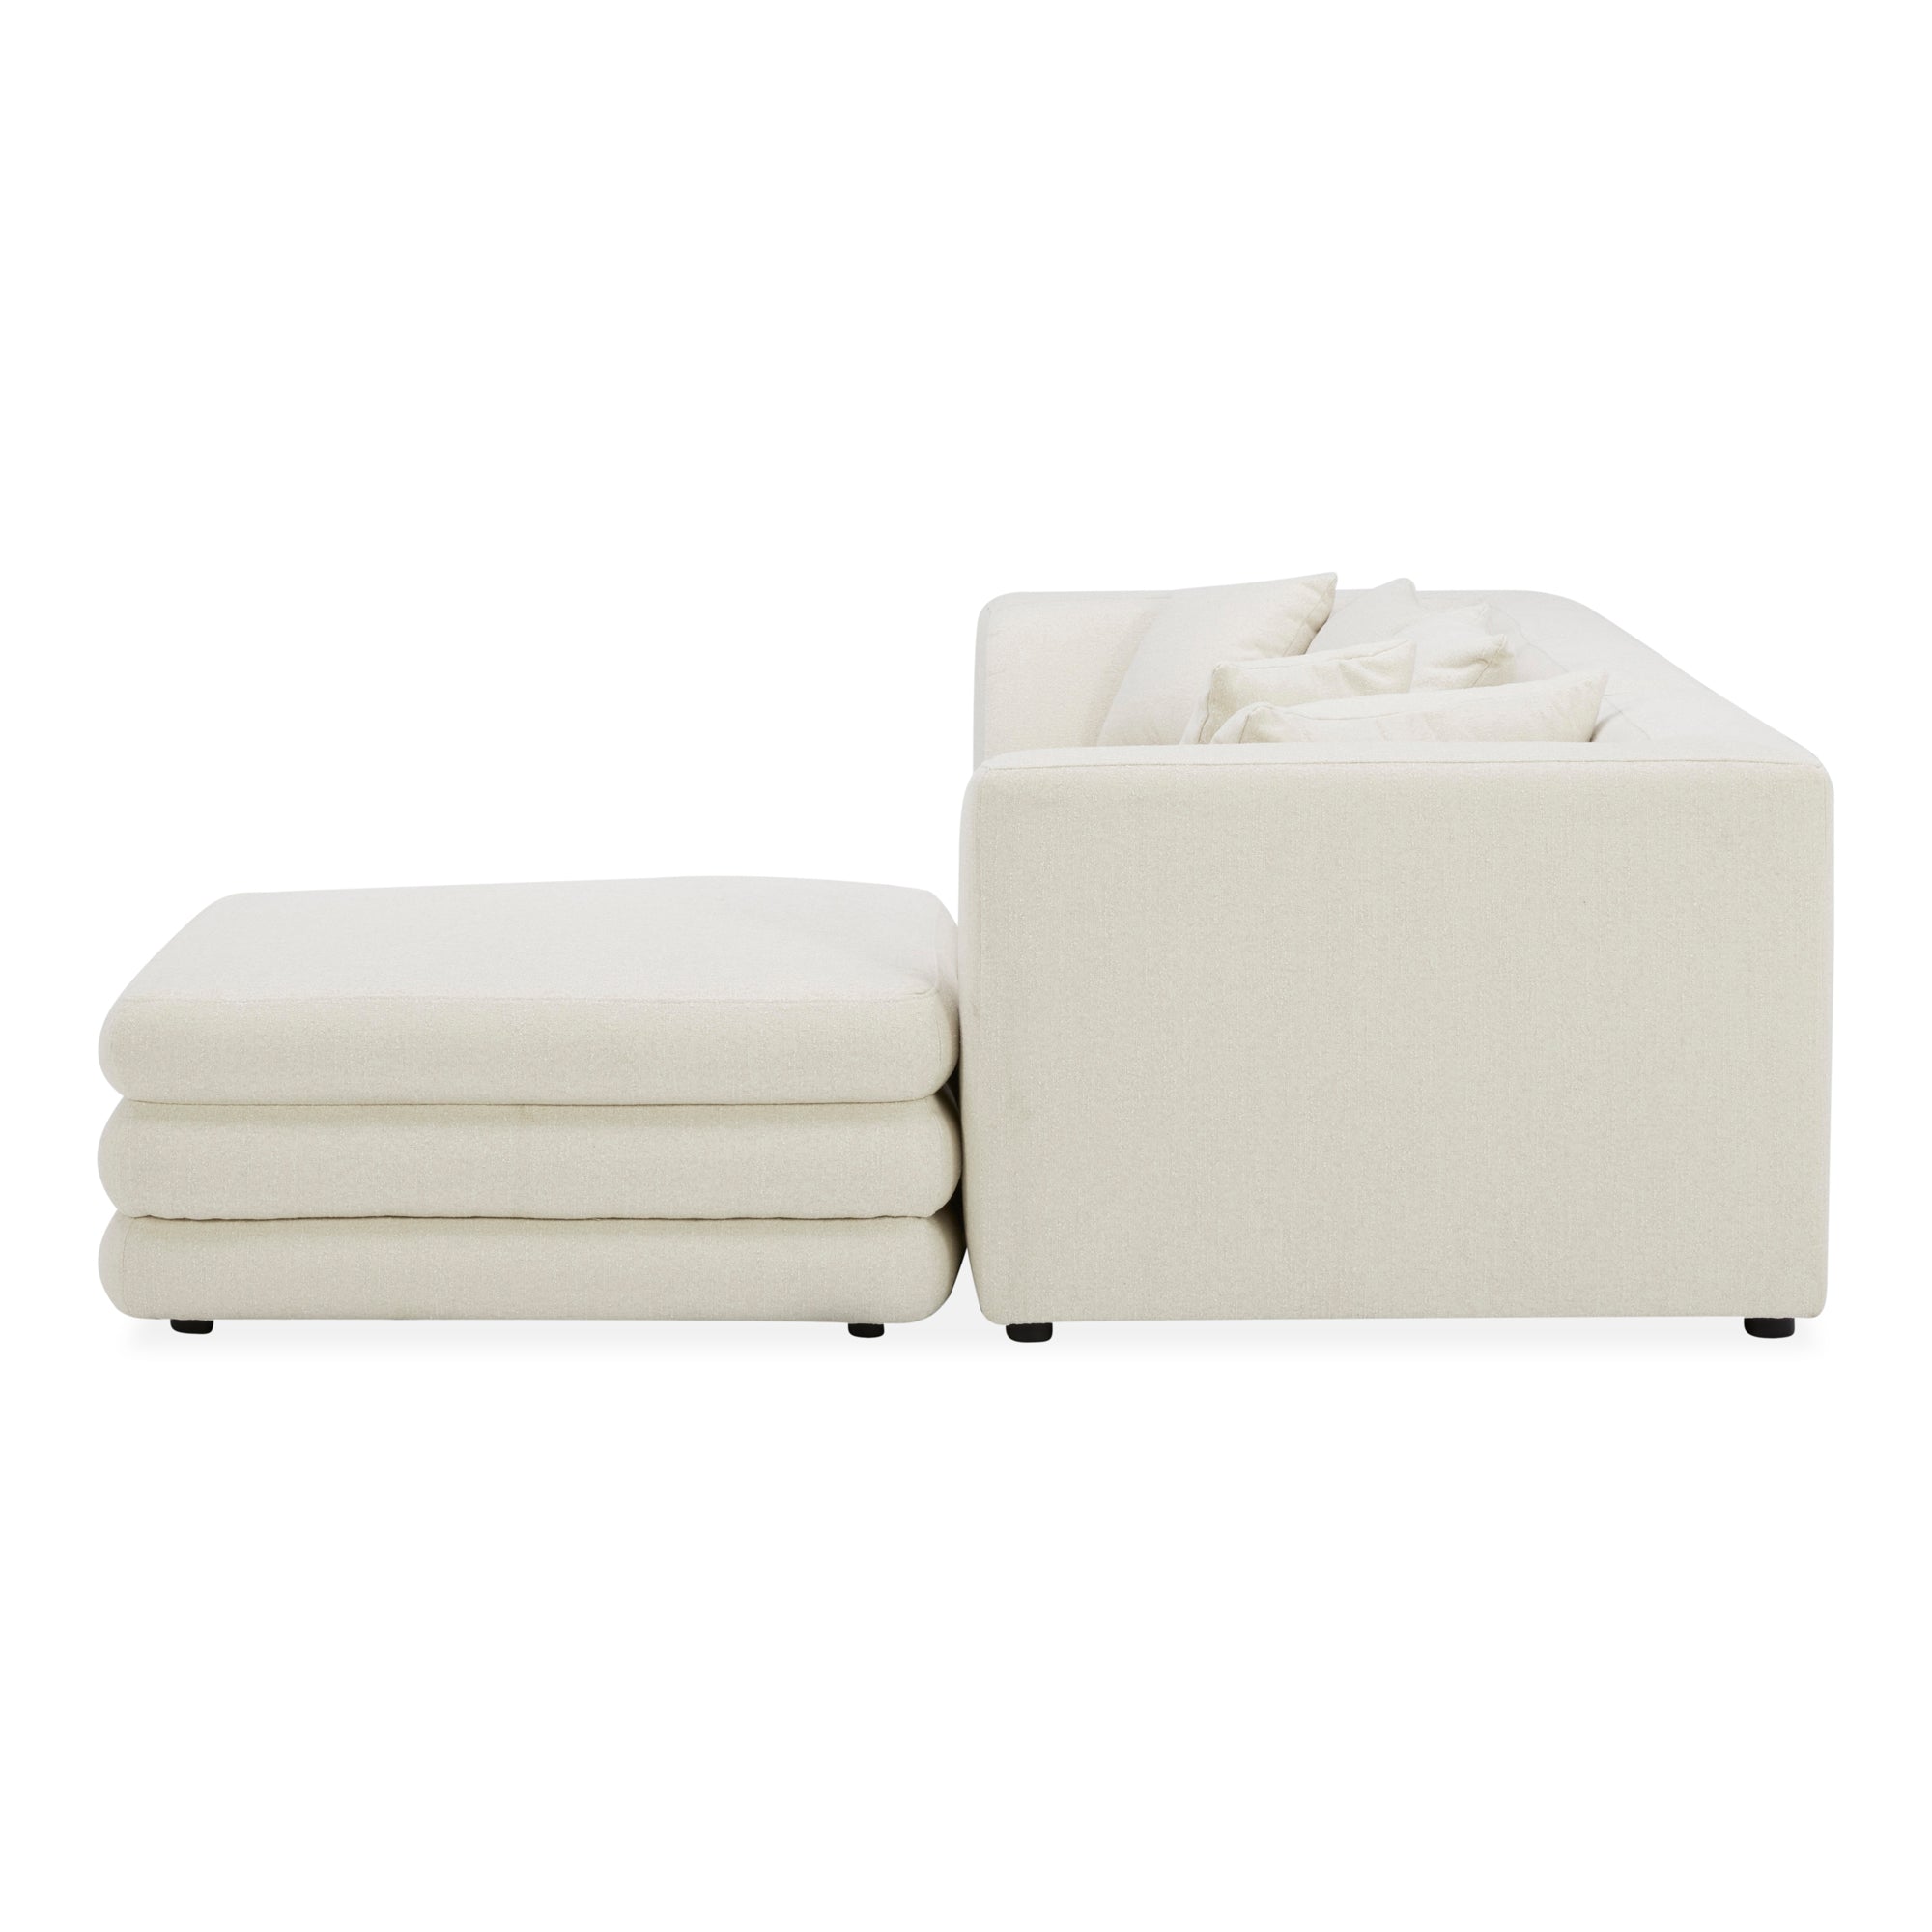 Lowtide Lounge Modular Sectional Warm White